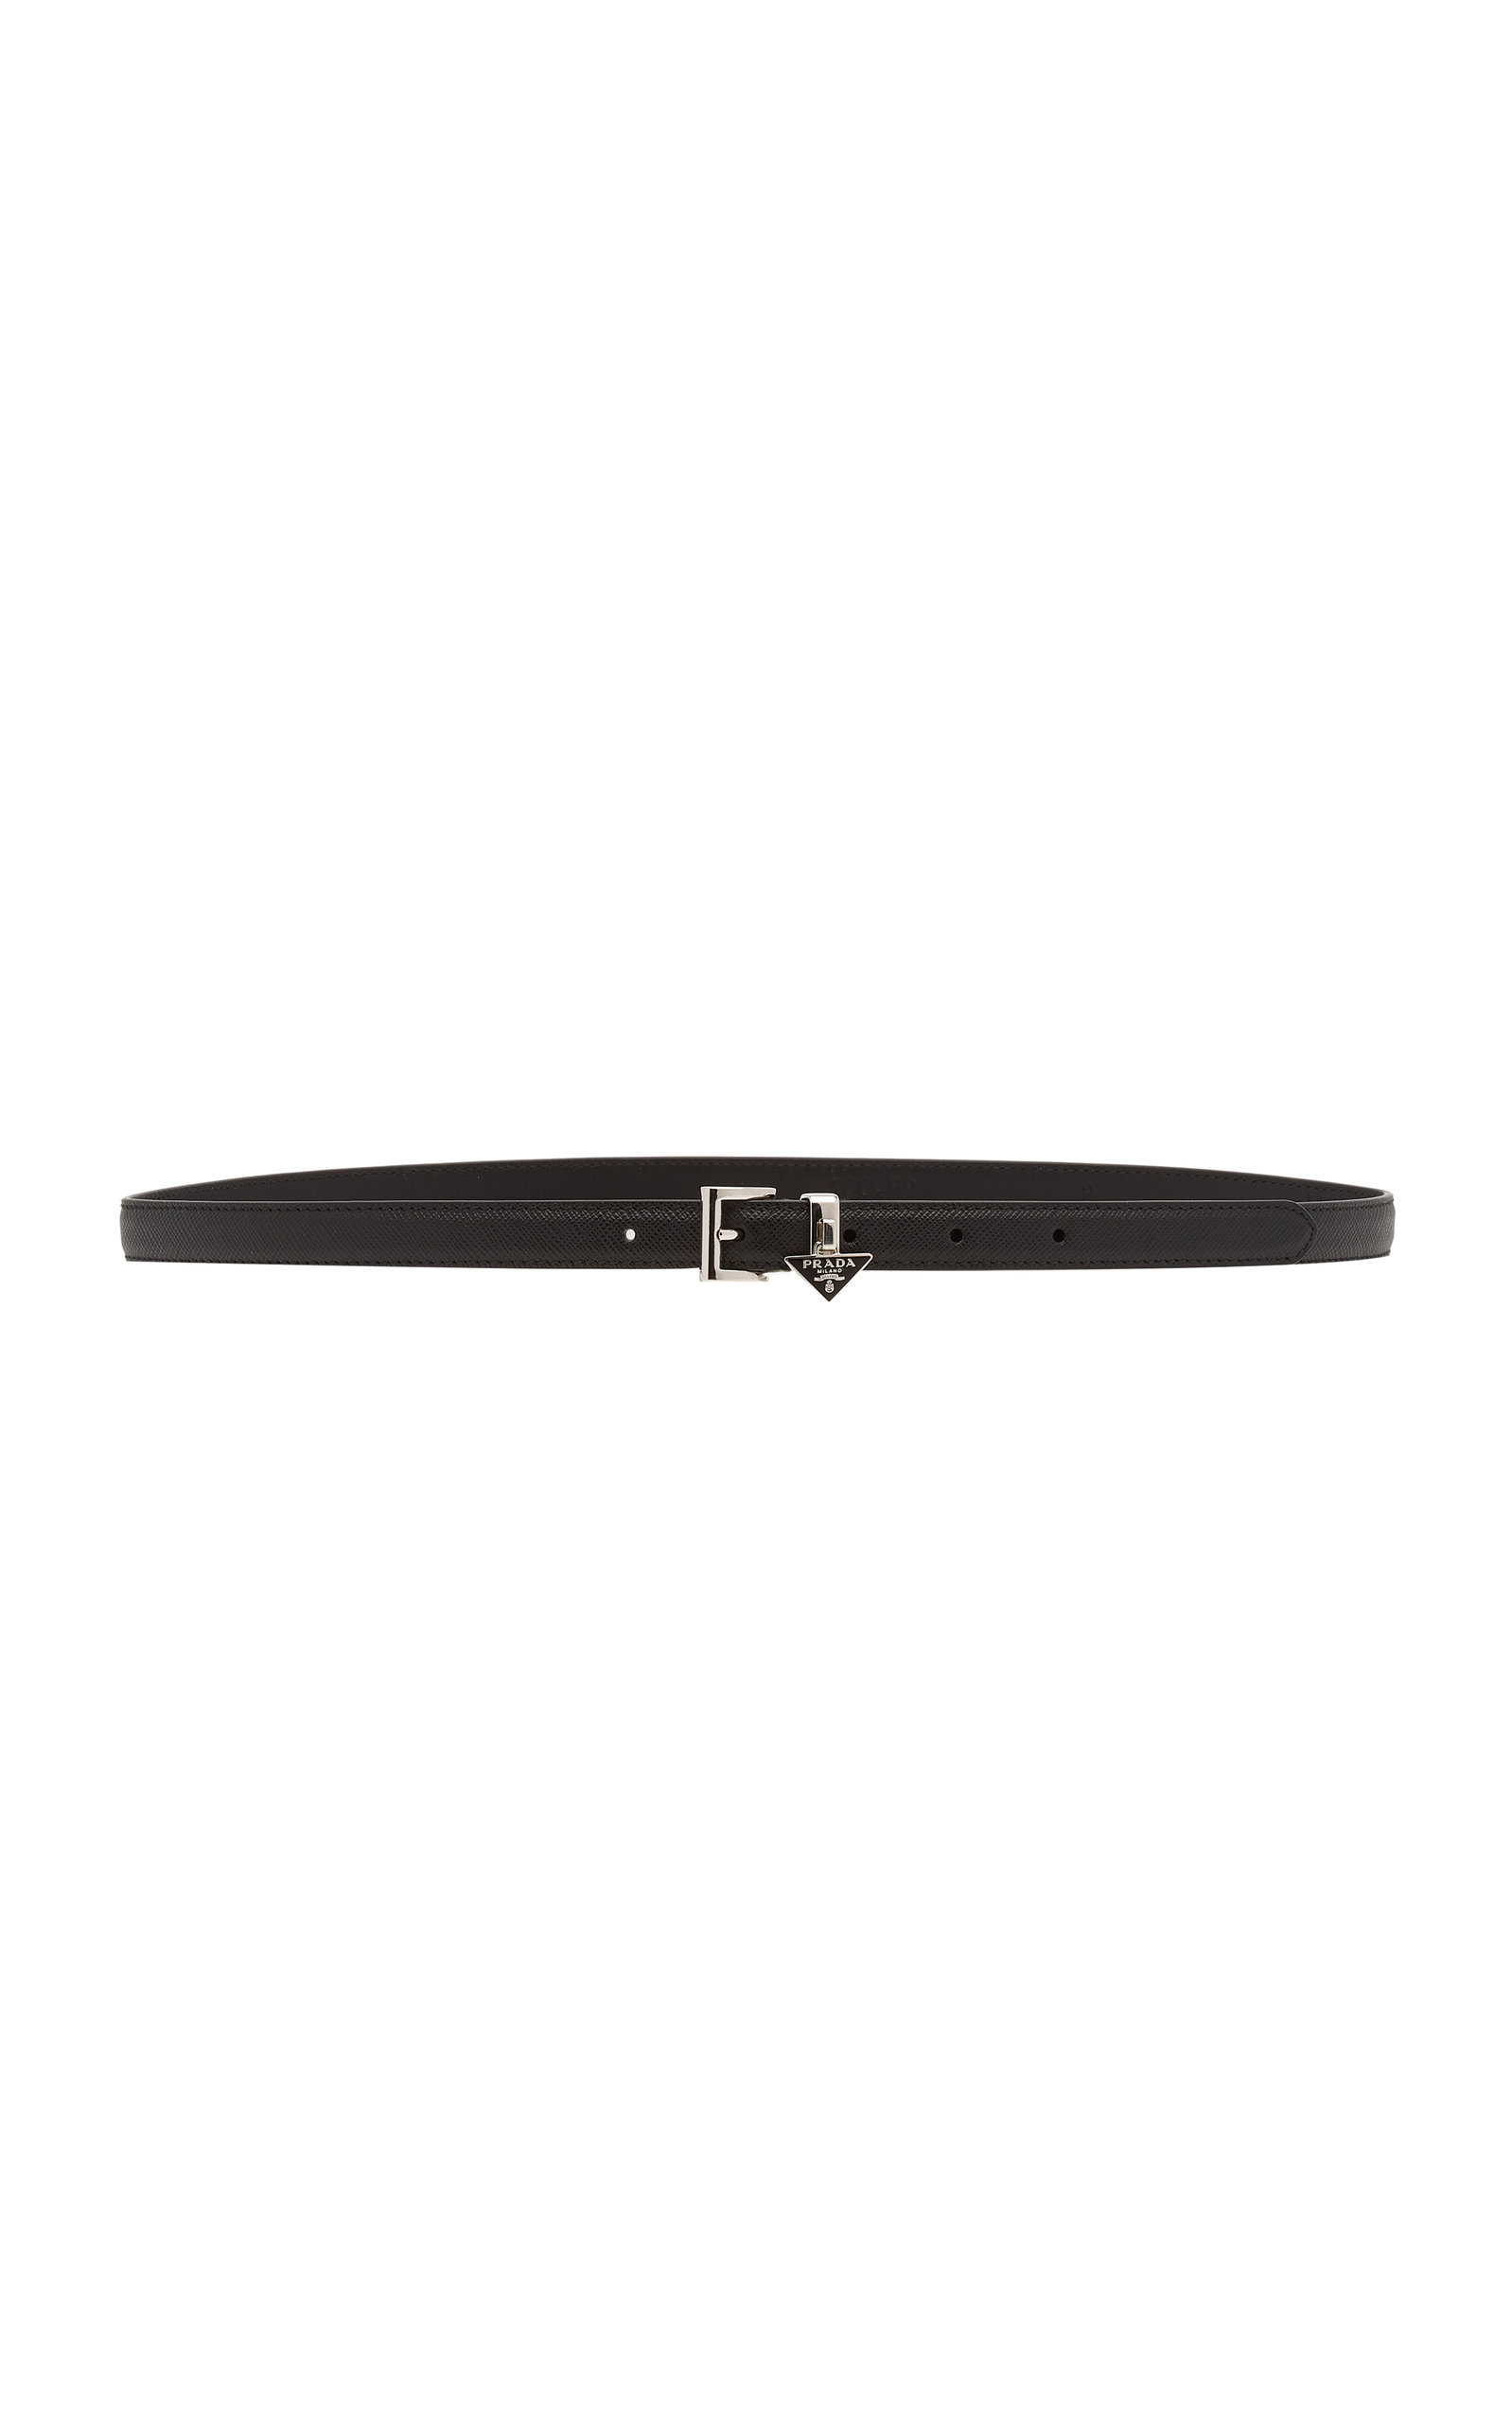 Prada - Women's Saffiano Leather Belt - Black - 65 cm - Moda Operandi